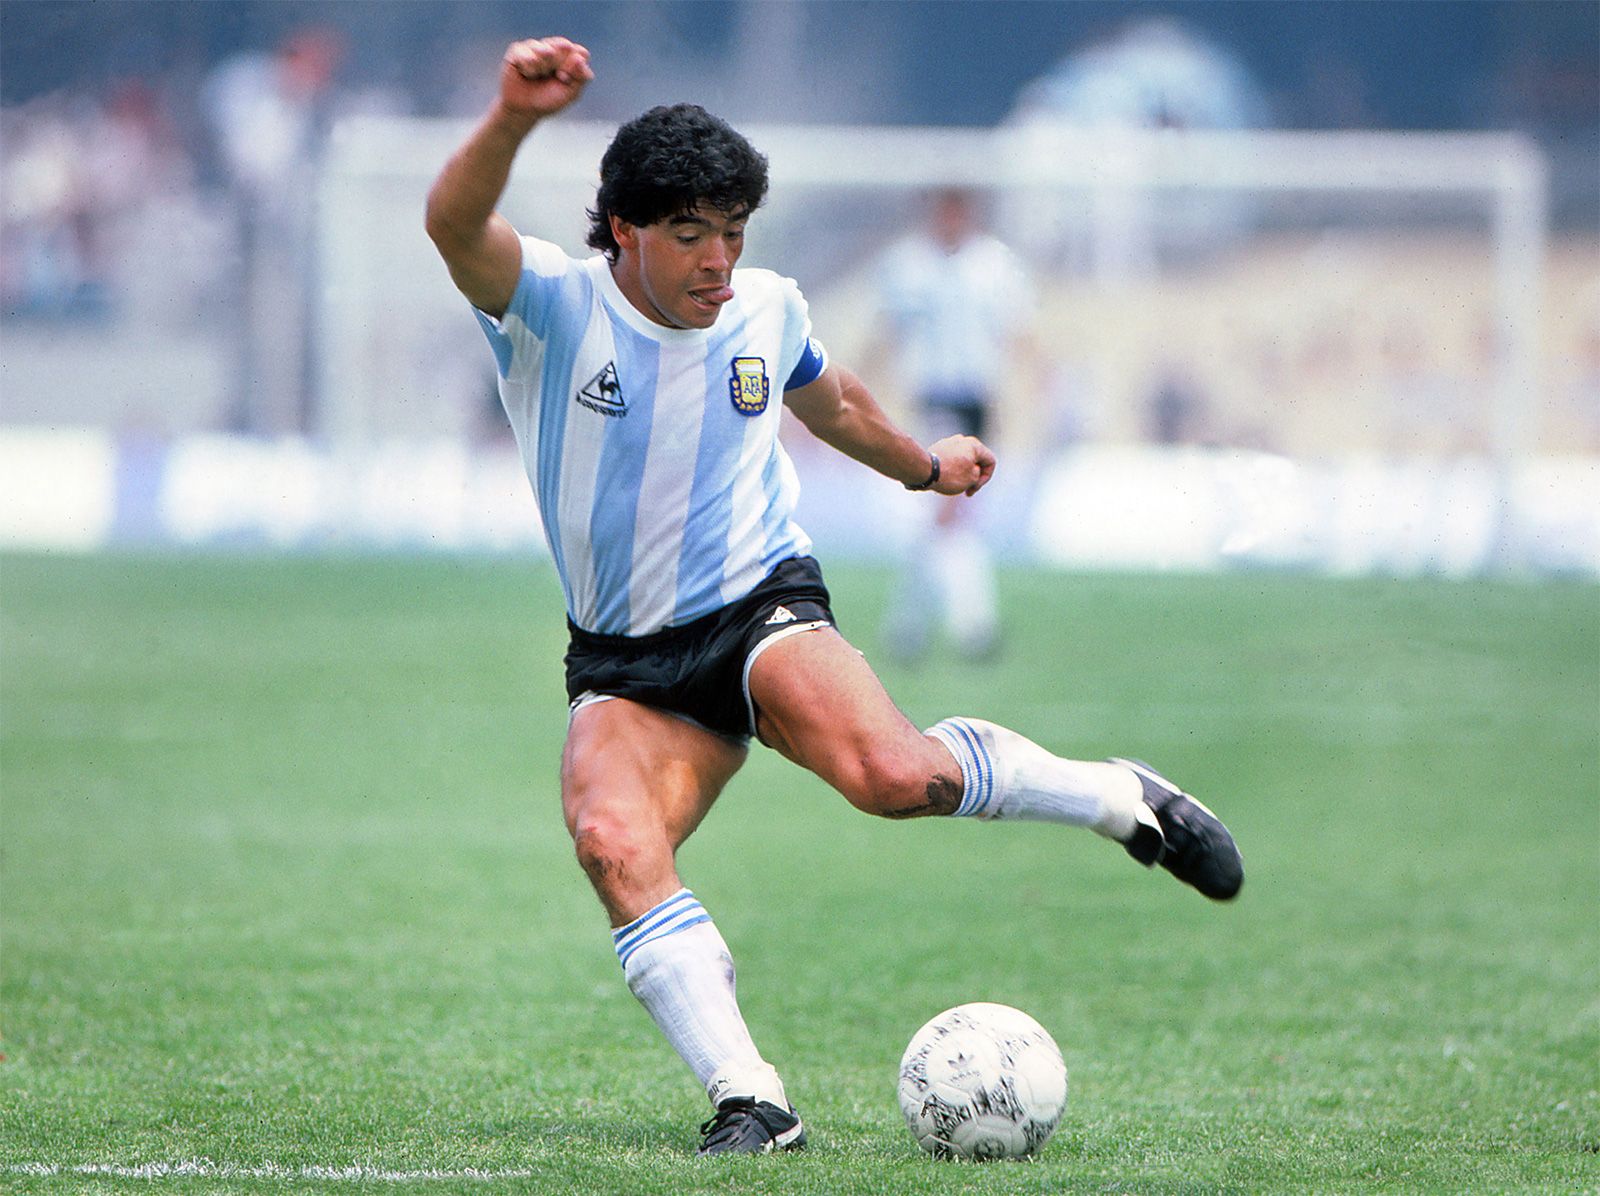 Diego Maradona | Biography, Hand of God, & Facts | Britannica